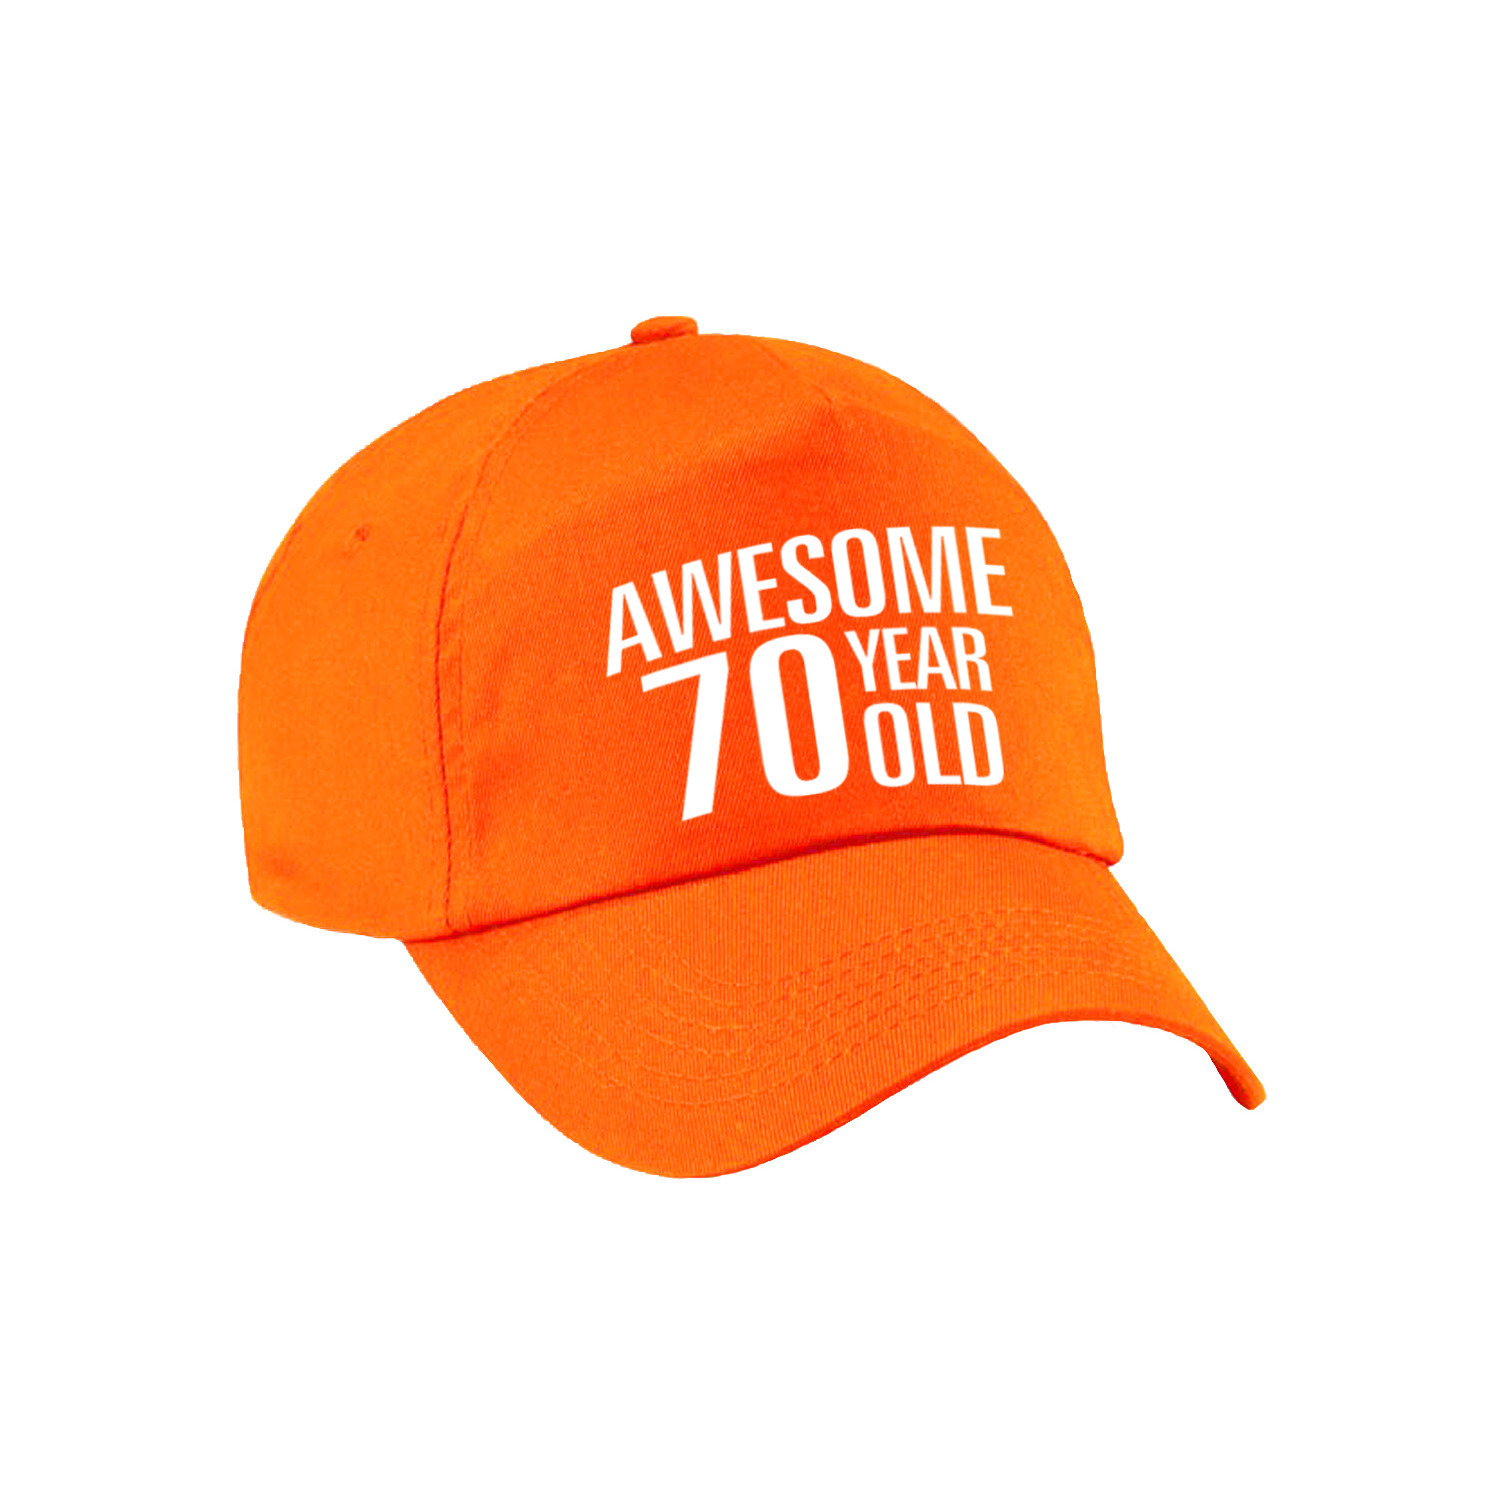 Awesome 70 year old verjaardag pet / cap oranje voor dames en heren